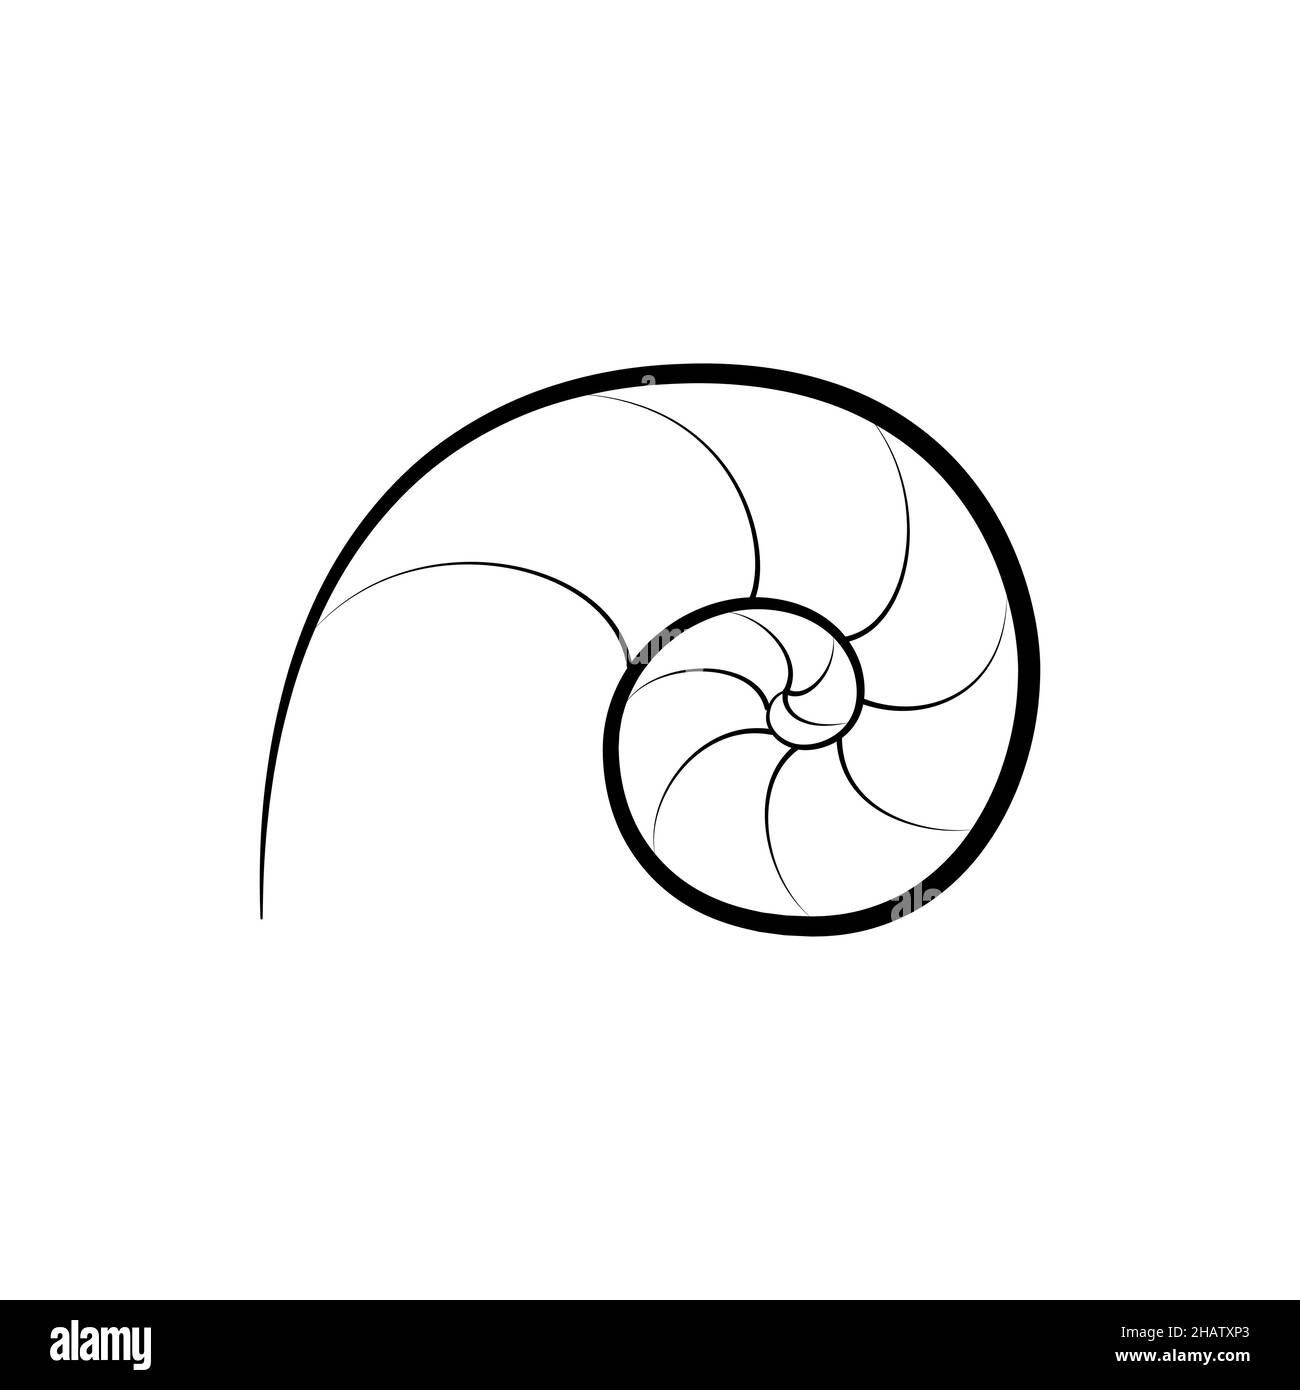 Illustration vectorielle du logo Seashell.Style minimaliste Illustration de Vecteur